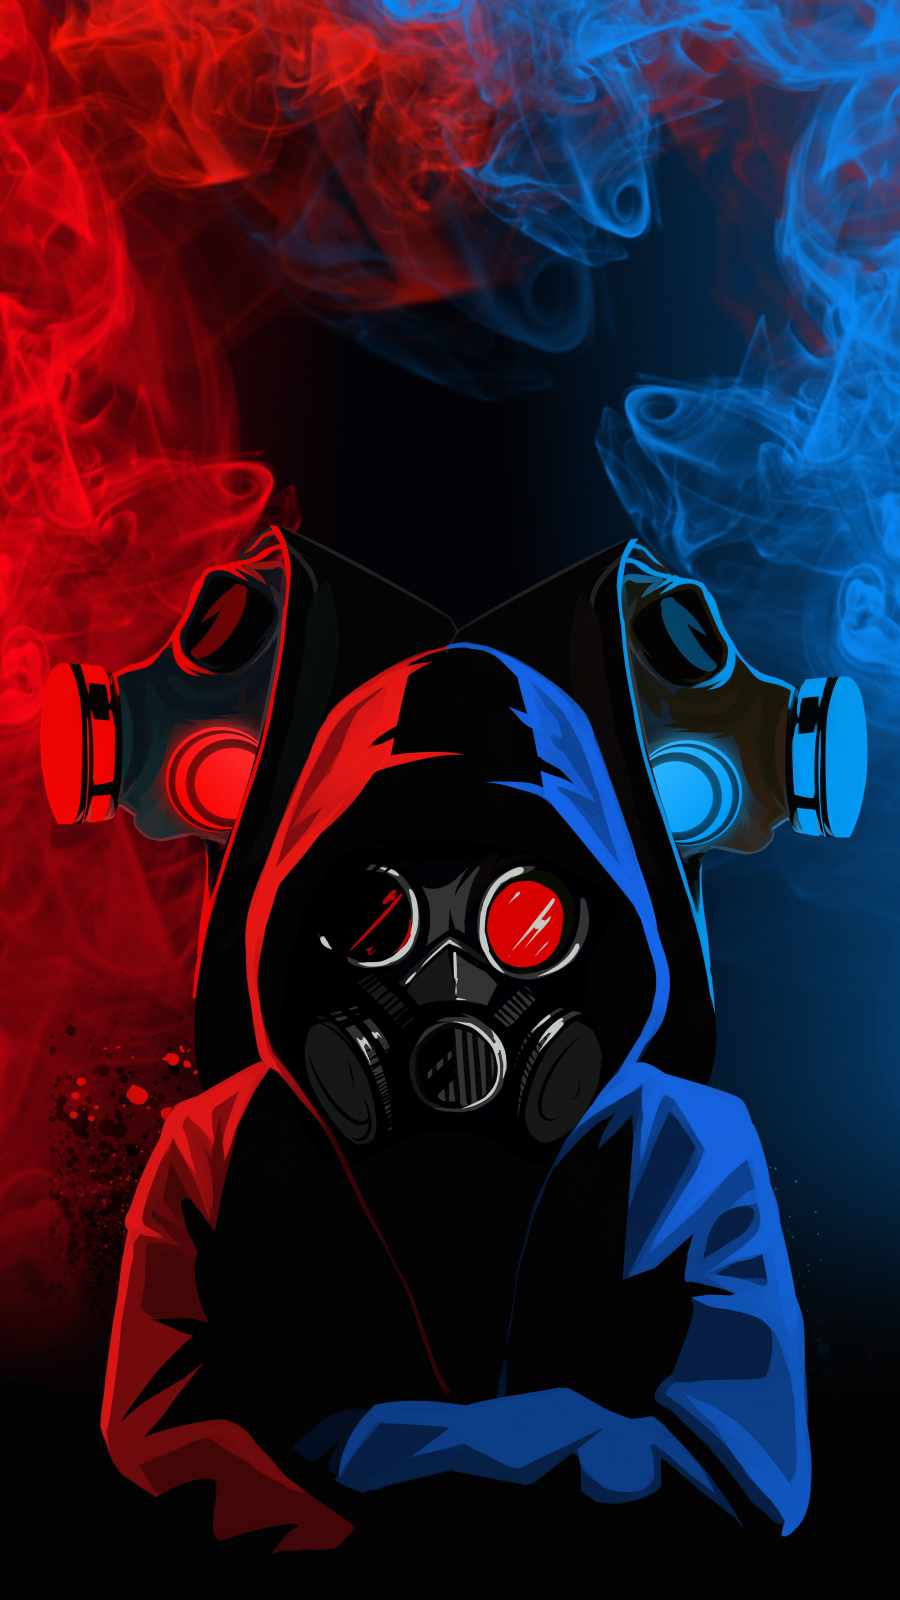 JSN 🦖🌠 na platformě X: „Gas mask #Drawing #Girl #Anime #Illustration  #BlackAndWhite #BnW #Portrait #GasMask #Mask #Sci-fi  https://t.co/sZfdCMAP6d https://t.co/Rhm9j1FMuz“ / X